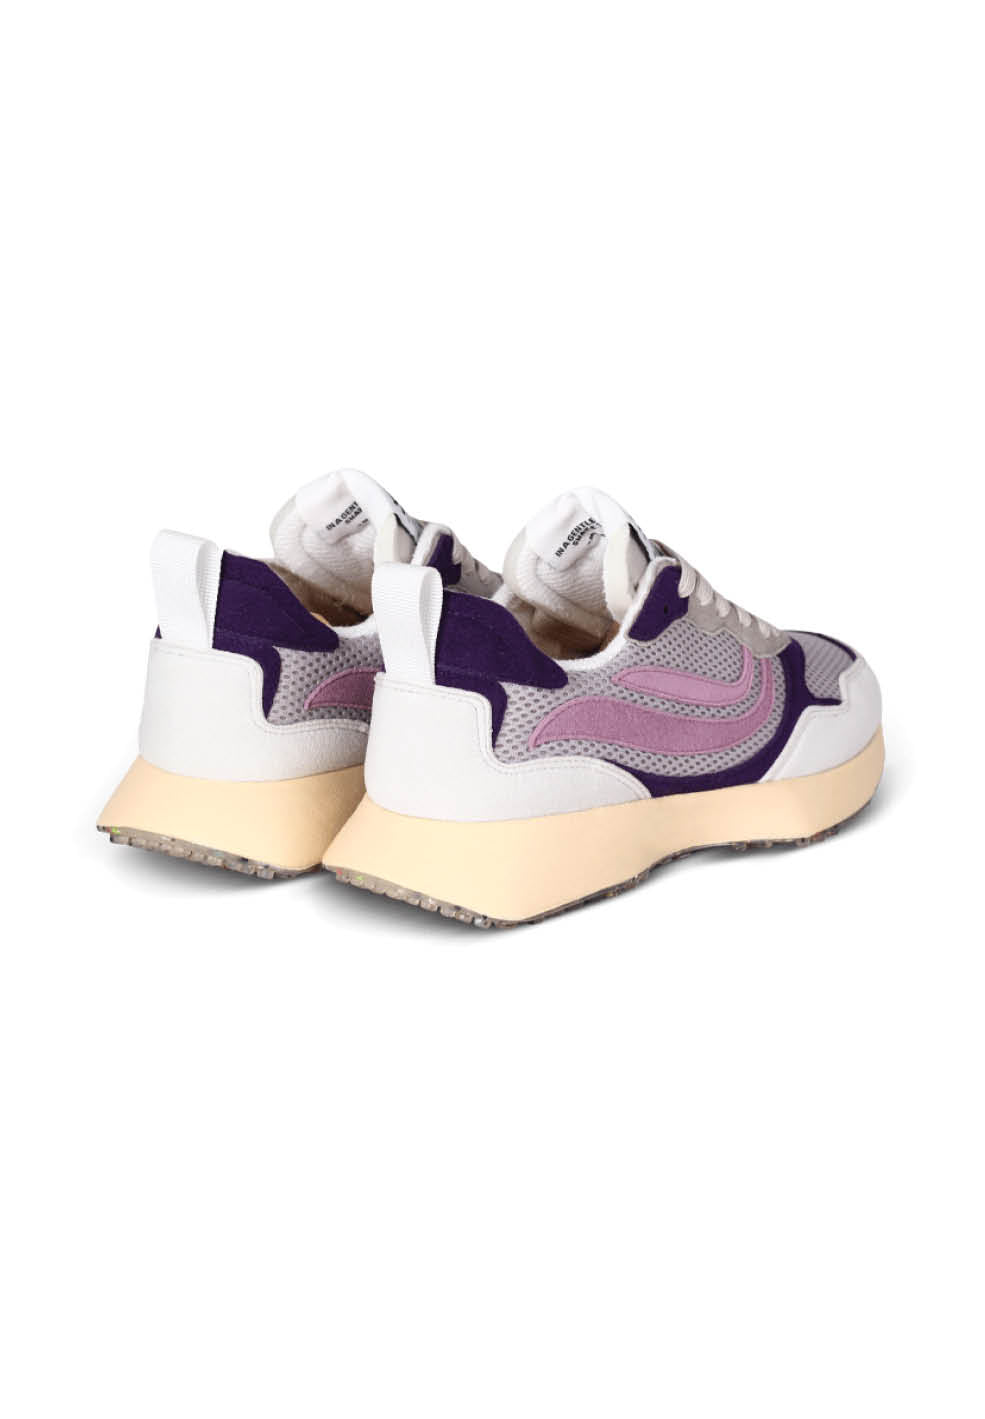 G-marathon sneaker grey-based off-white/purple/lavender